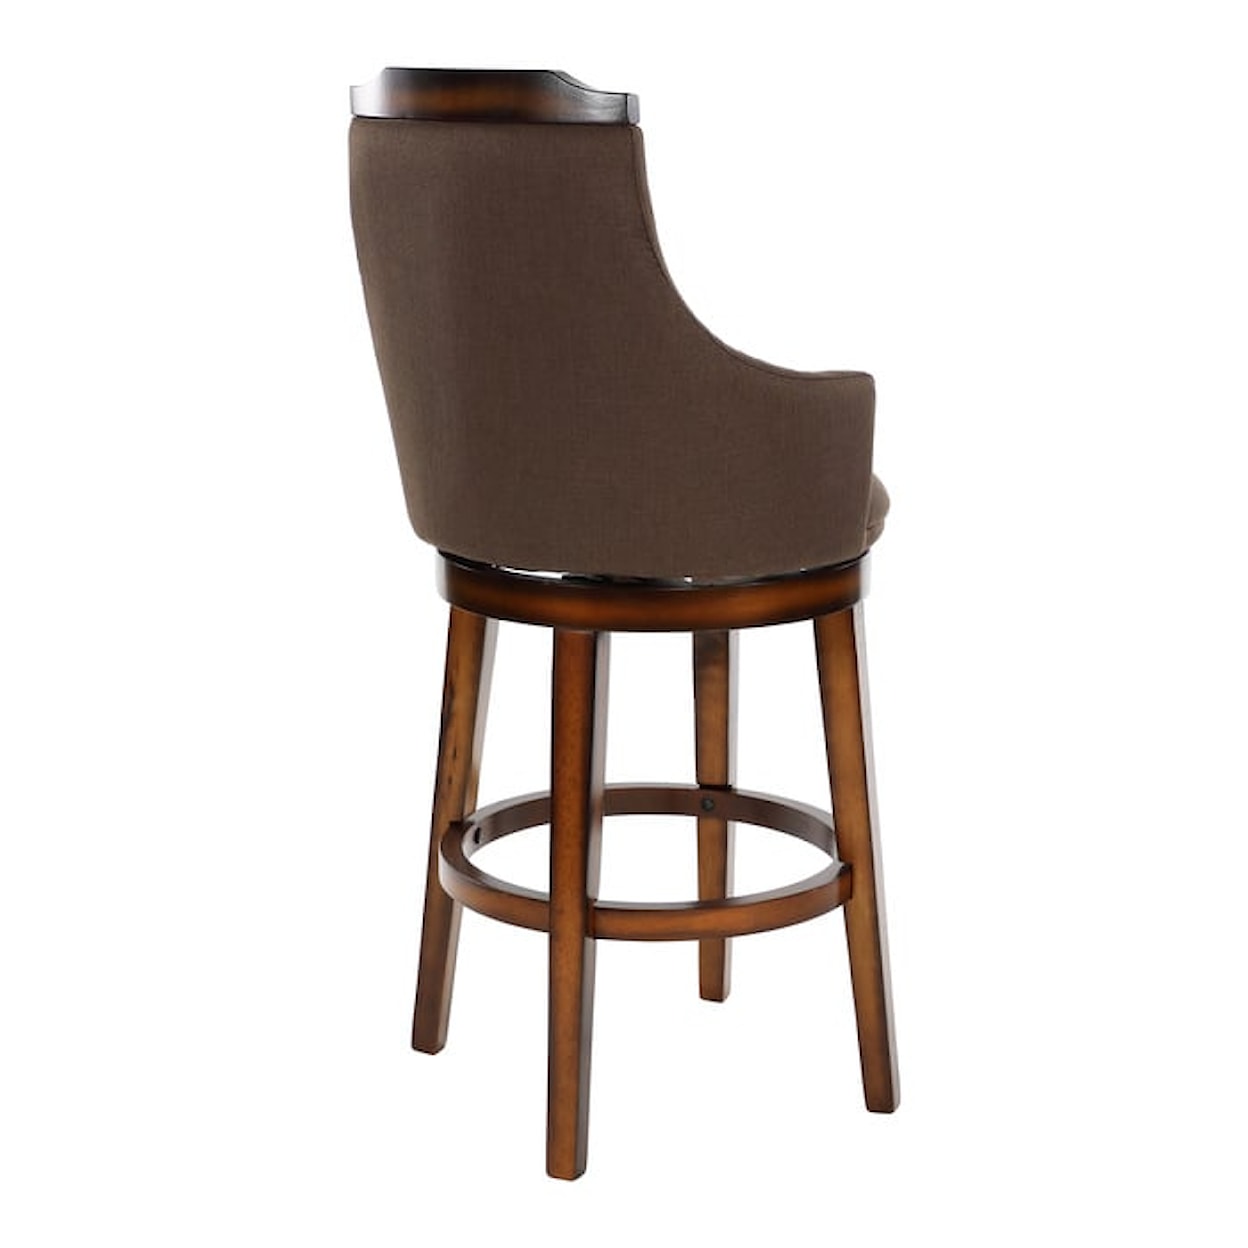 Homelegance Furniture Bayshore Pub Height Swivel Chair